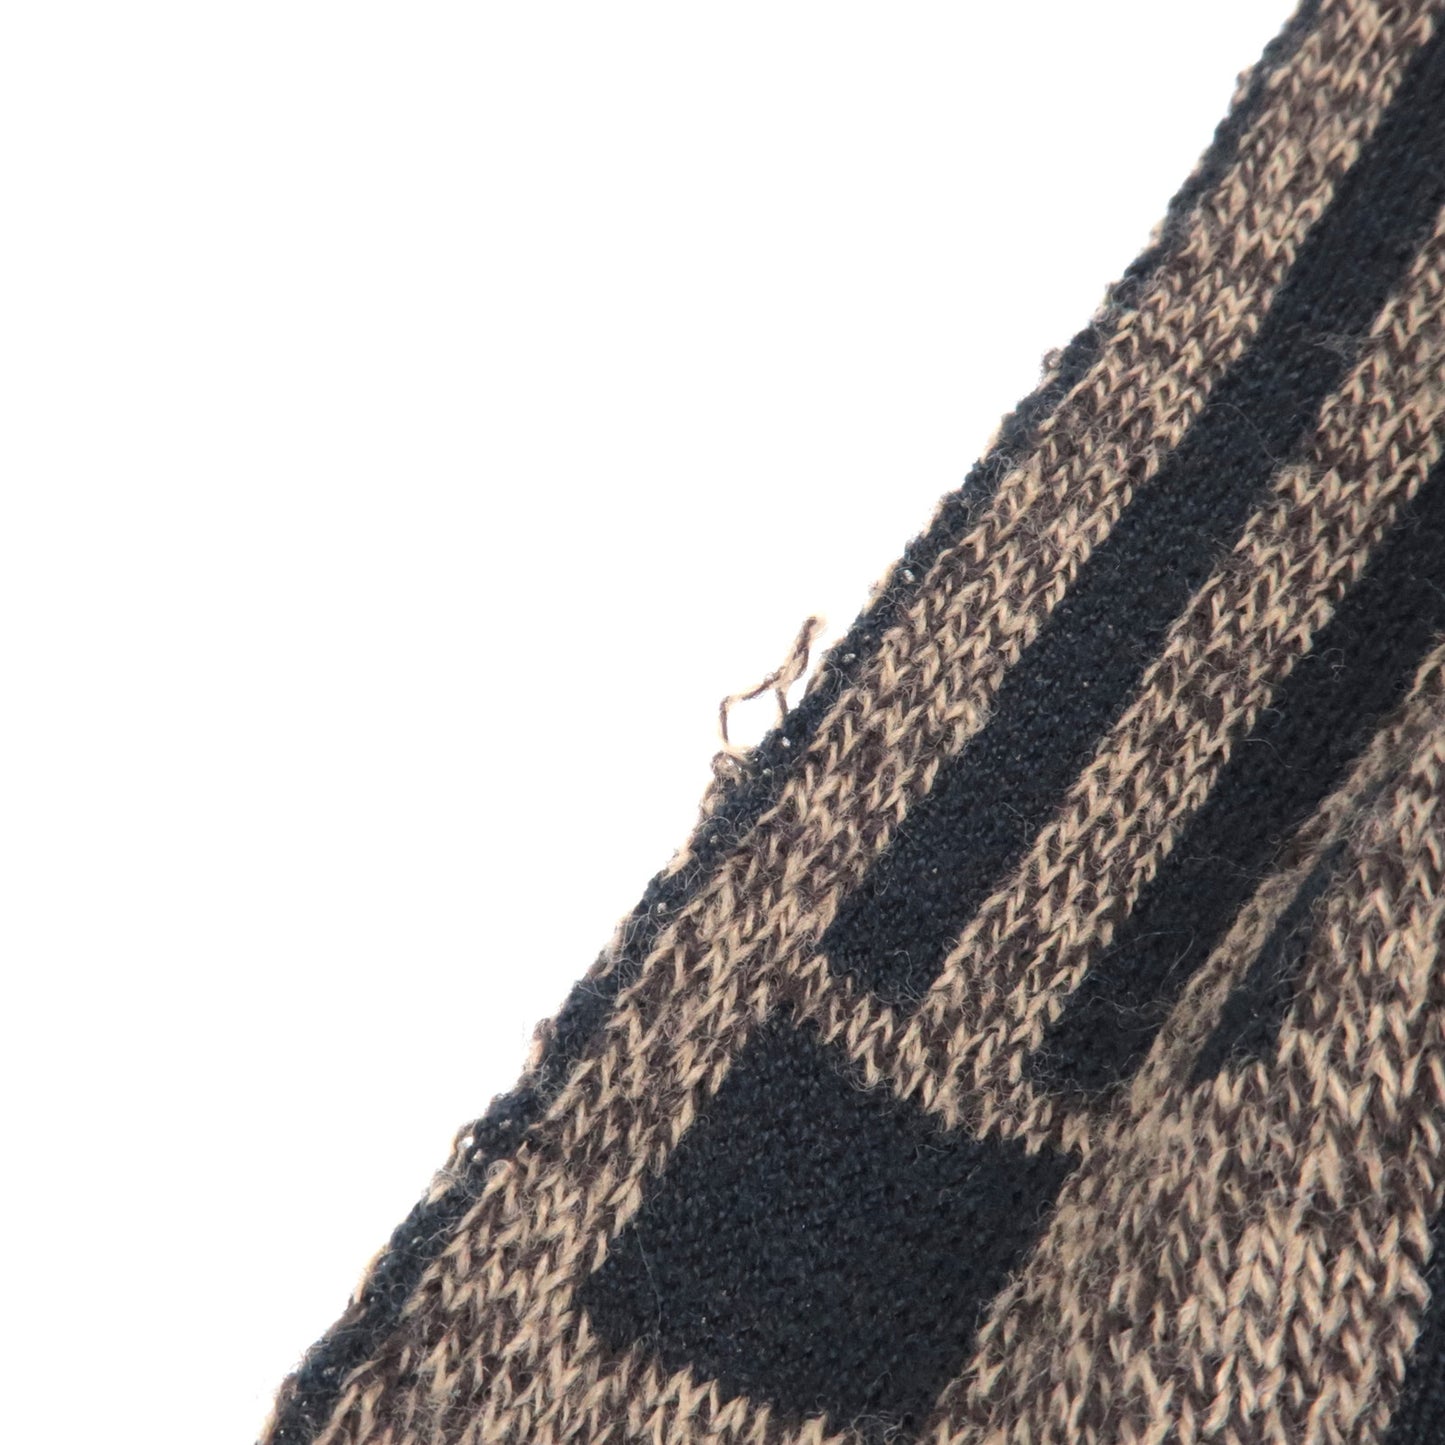 FENDI Zucca Print Knit Scarf Brown Black